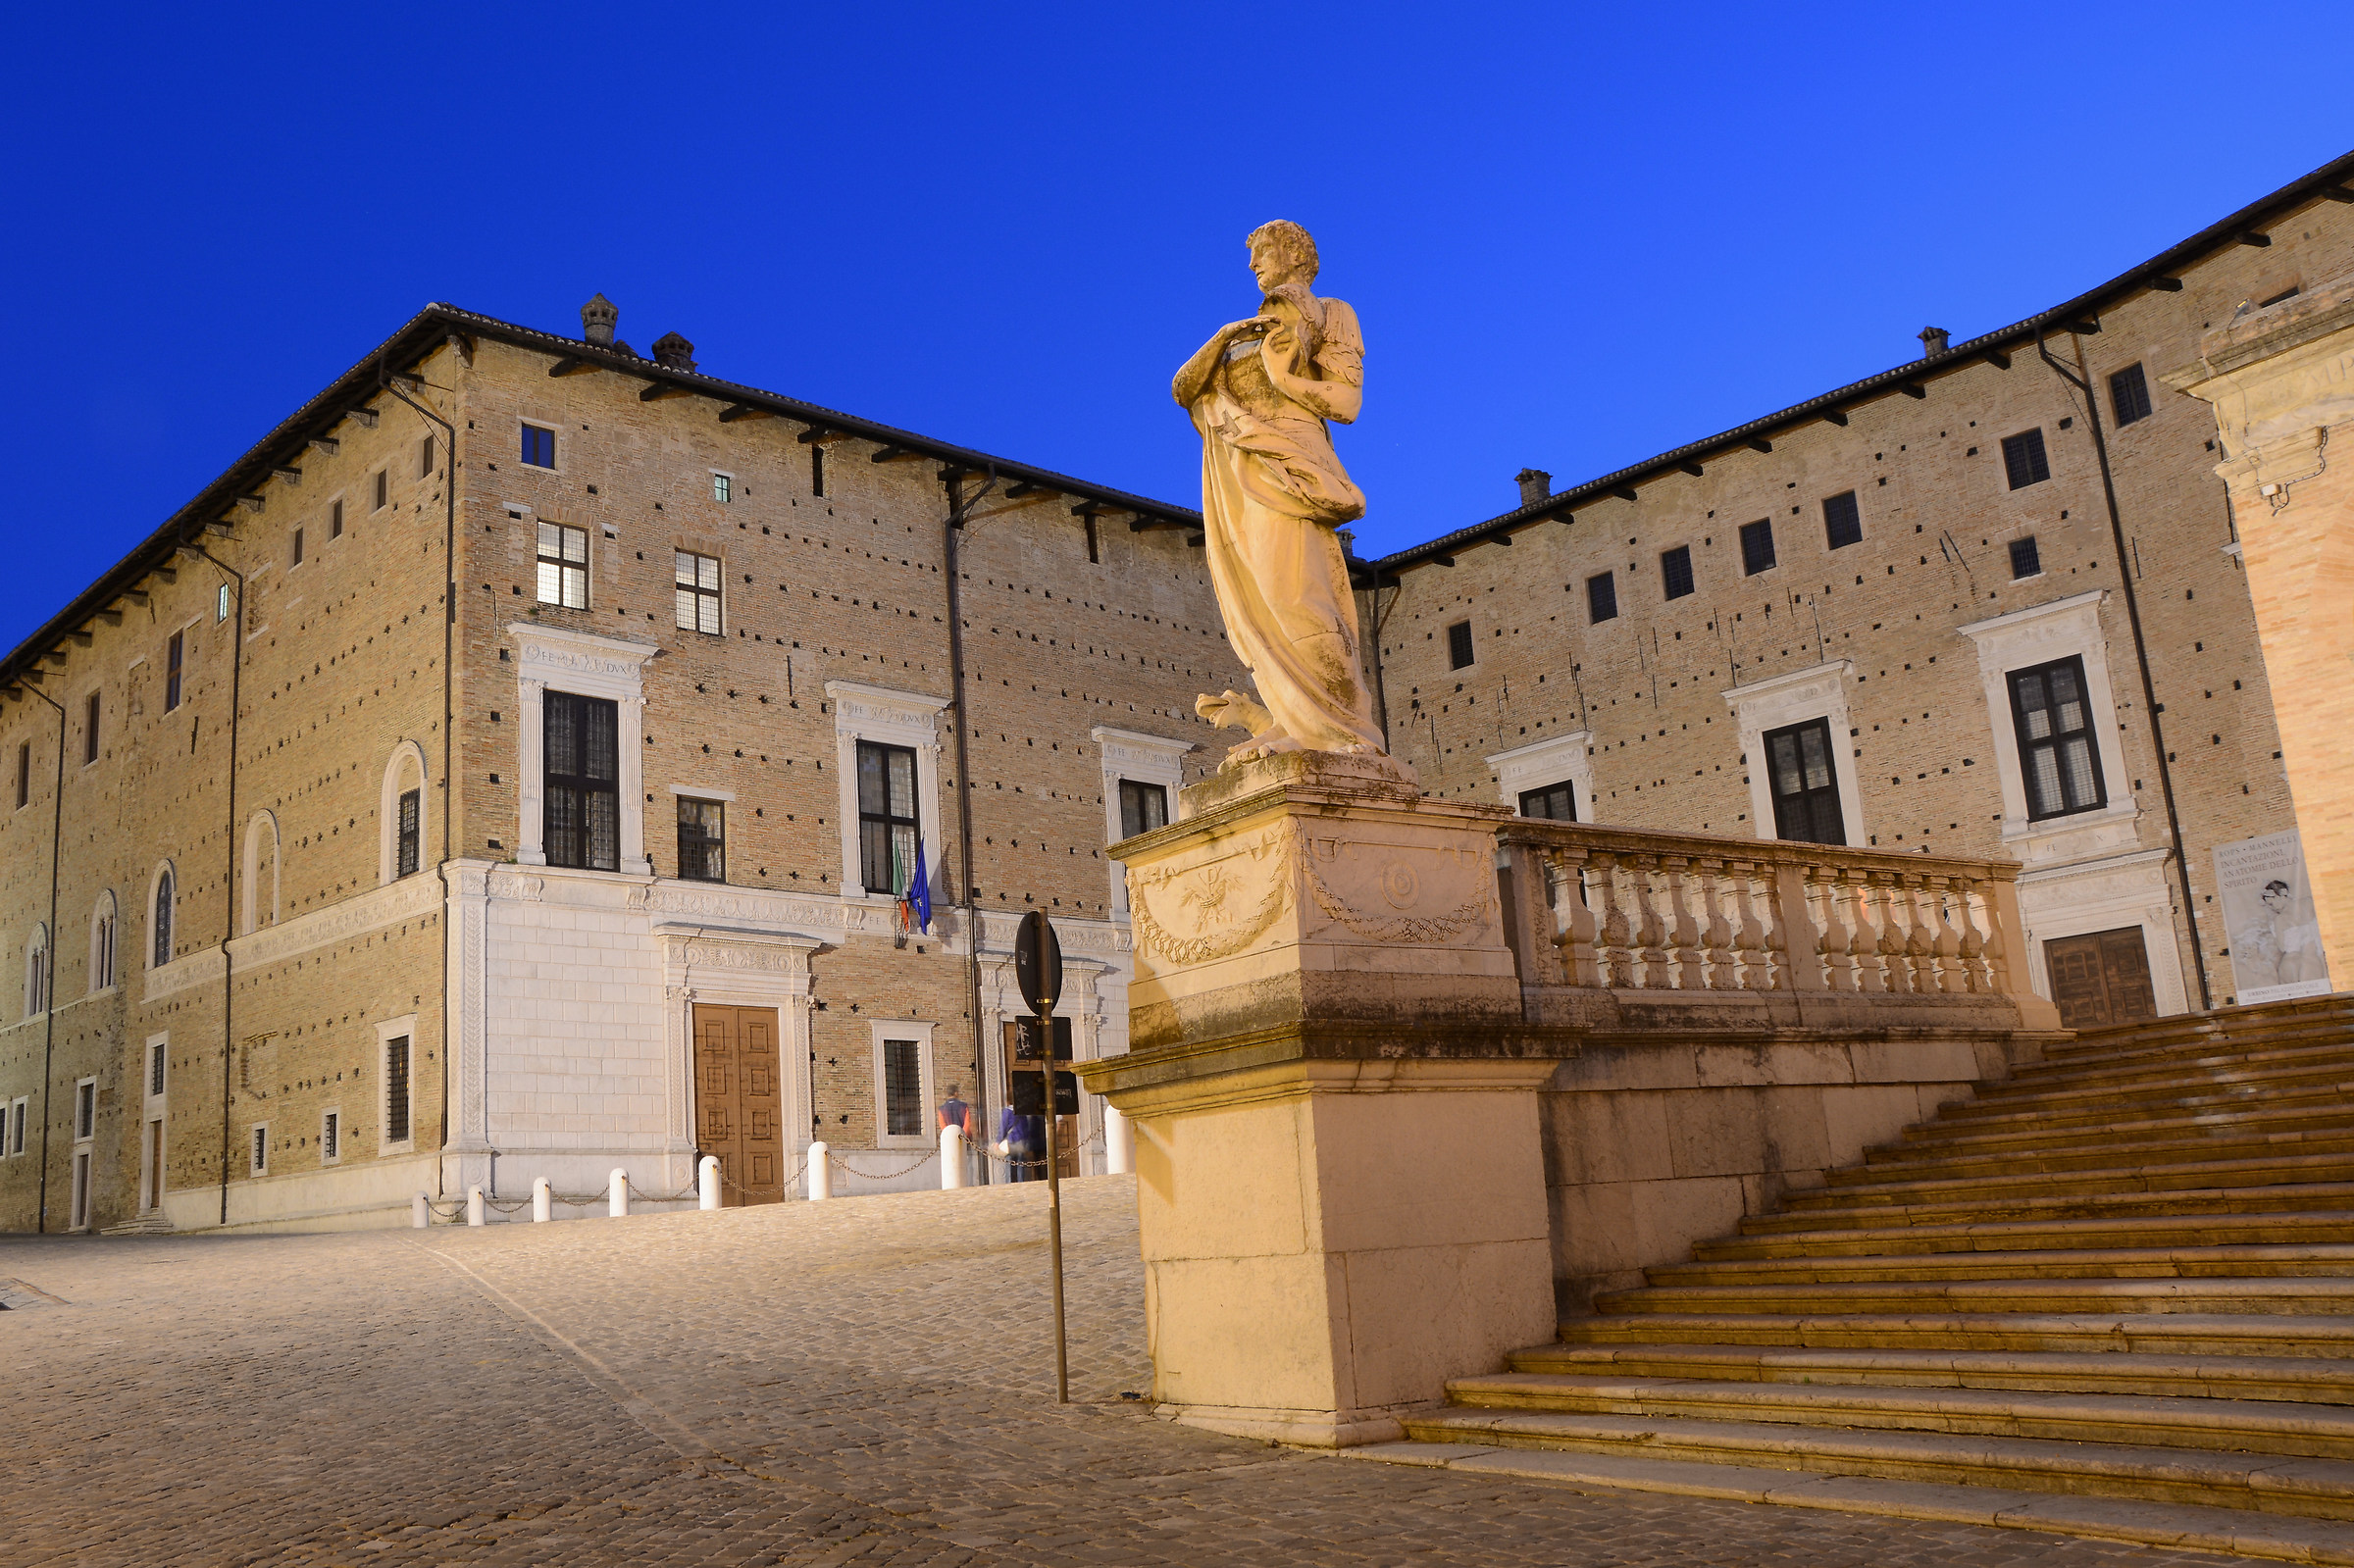 One night in Urbino...